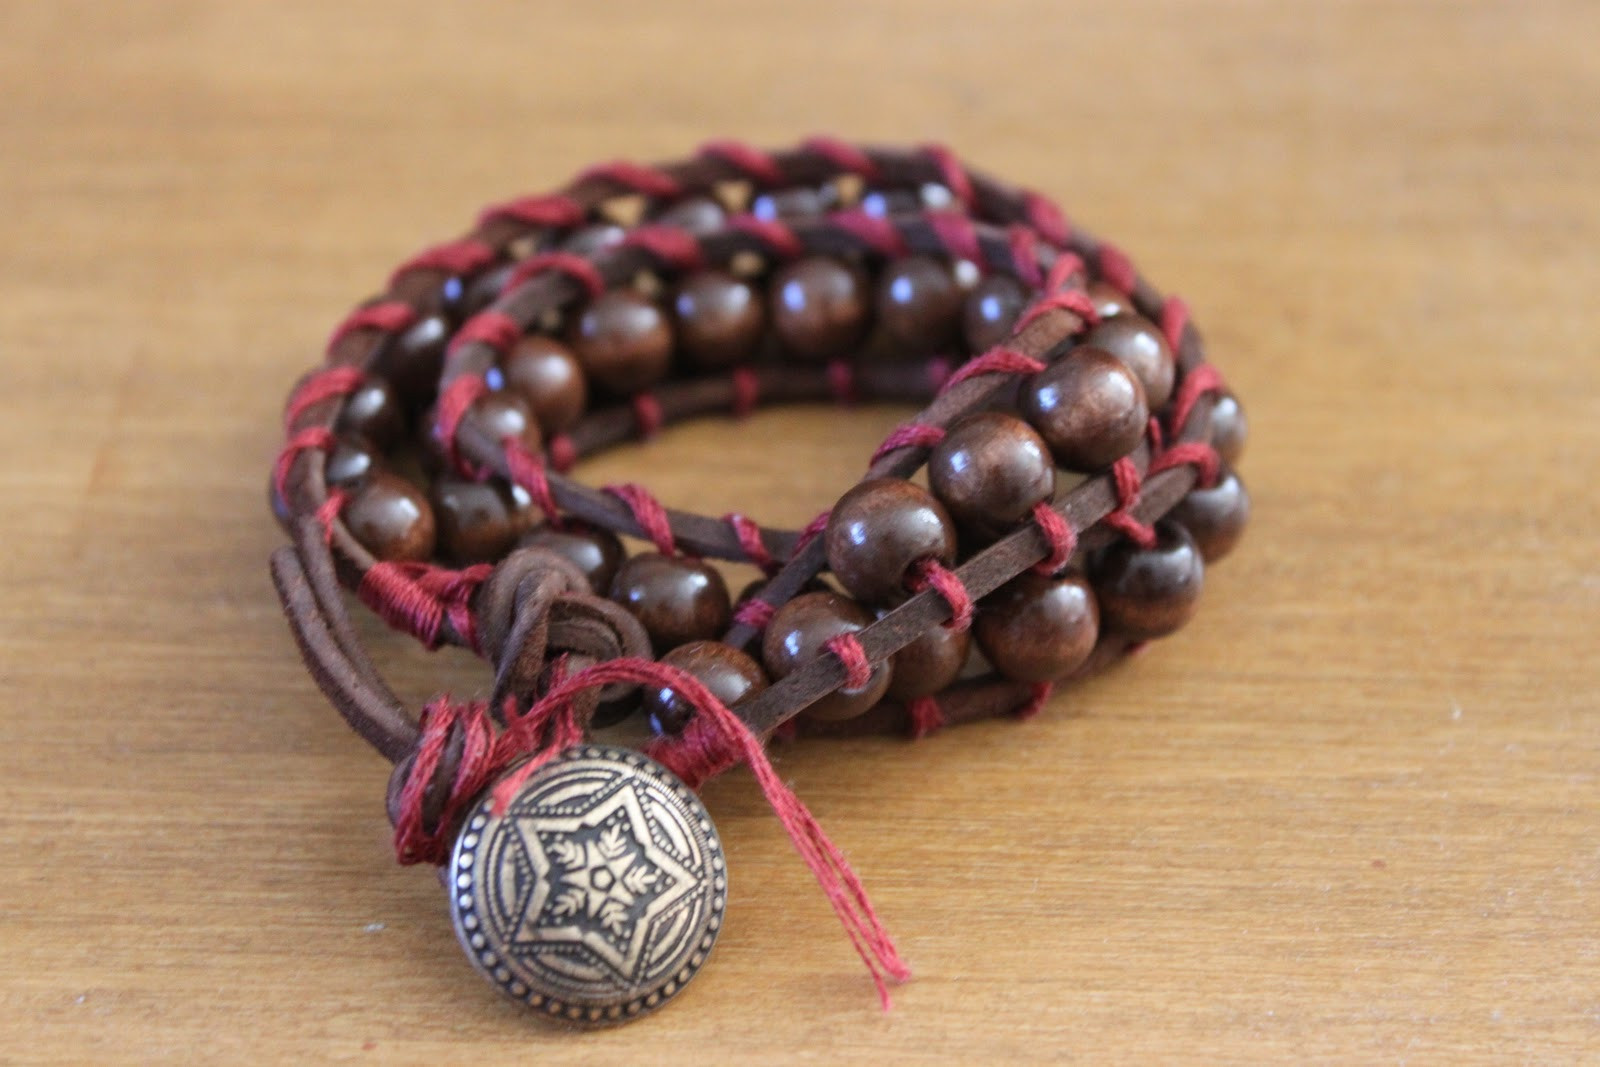 Best ideas about DIY Wrap Bracelet
. Save or Pin Yours Truly Lex DIY Beaded Wrap Bracelet Now.